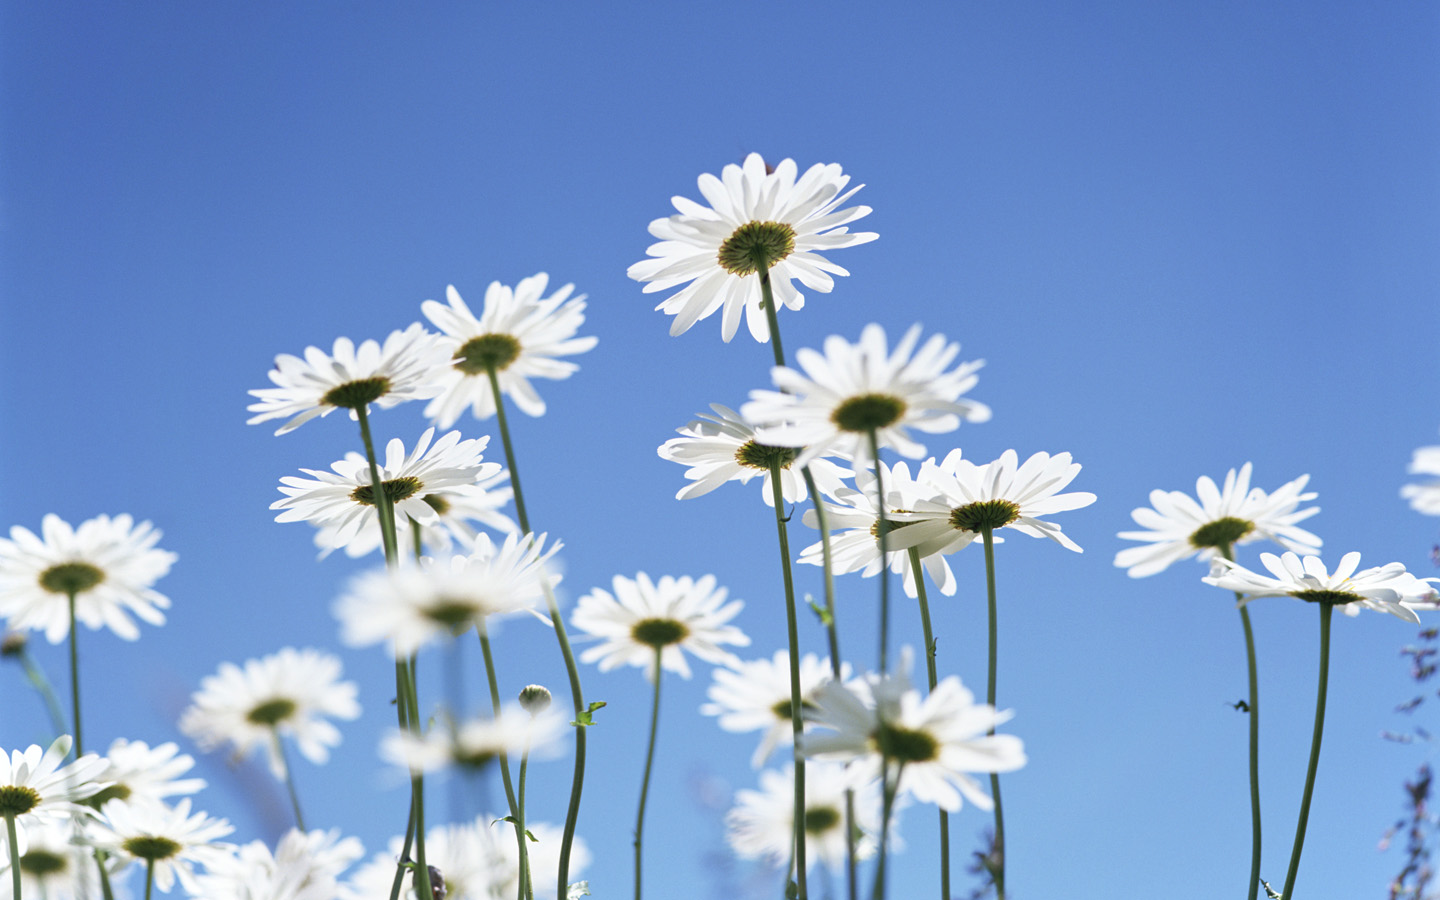 White Daisy Flowers